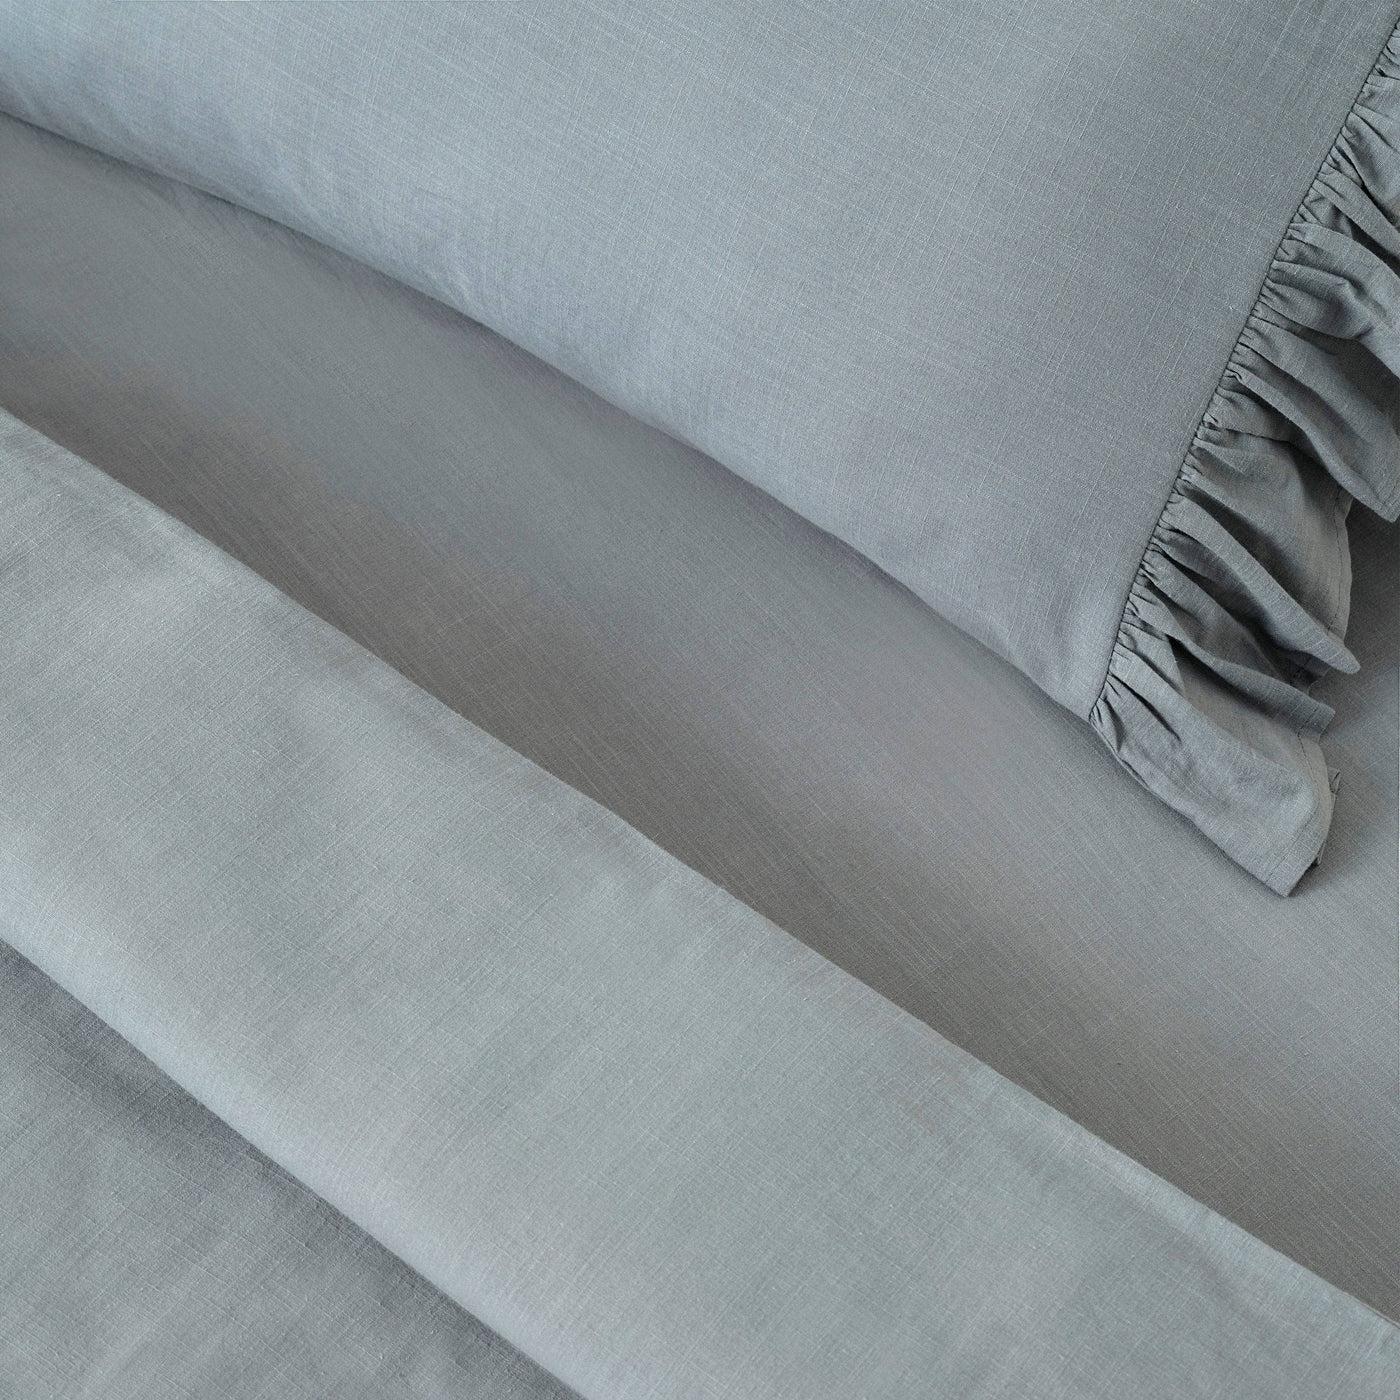 Ruby 100% Turkish Cotton Duvet Cover Set + Fitted Sheet, Anthracite Grey, Super King Size Bedding Sets sazy.com